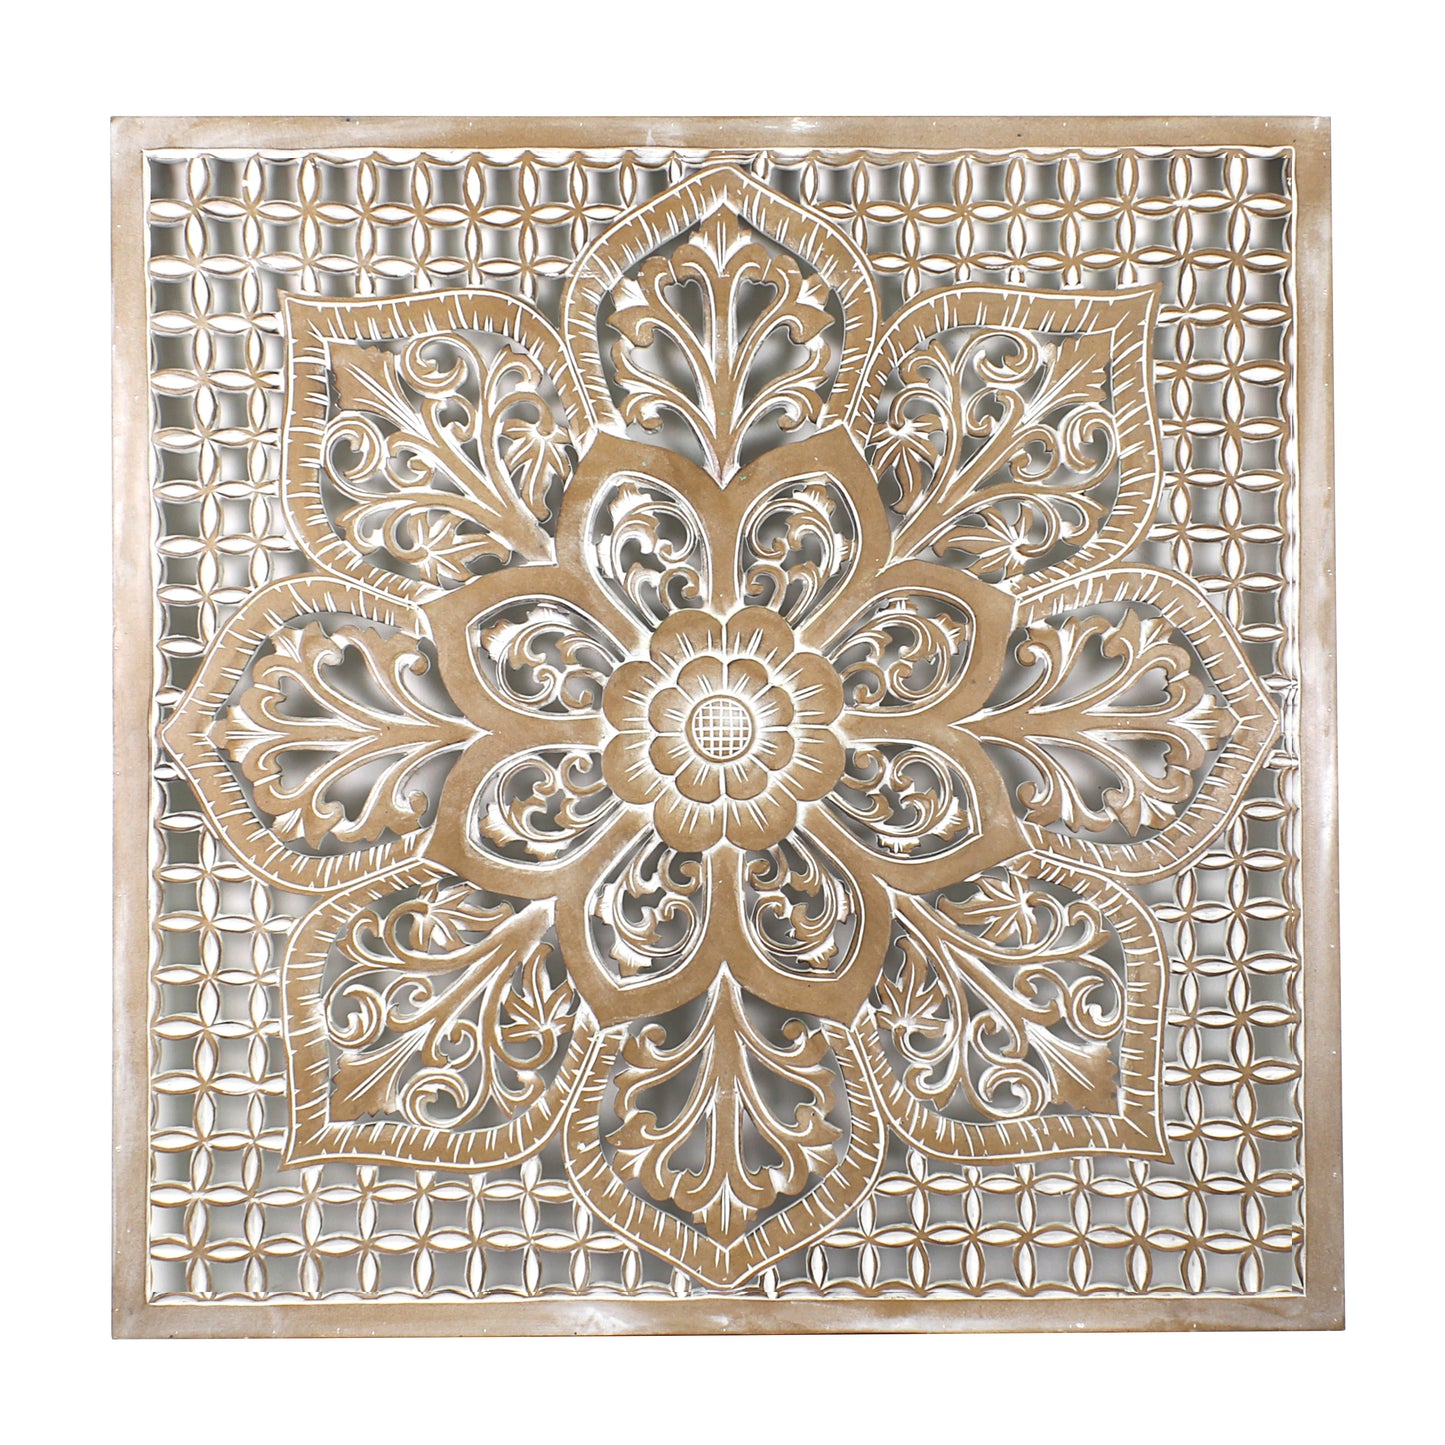 Decorative Panel "Medit" - Antic-wash - 120 cm